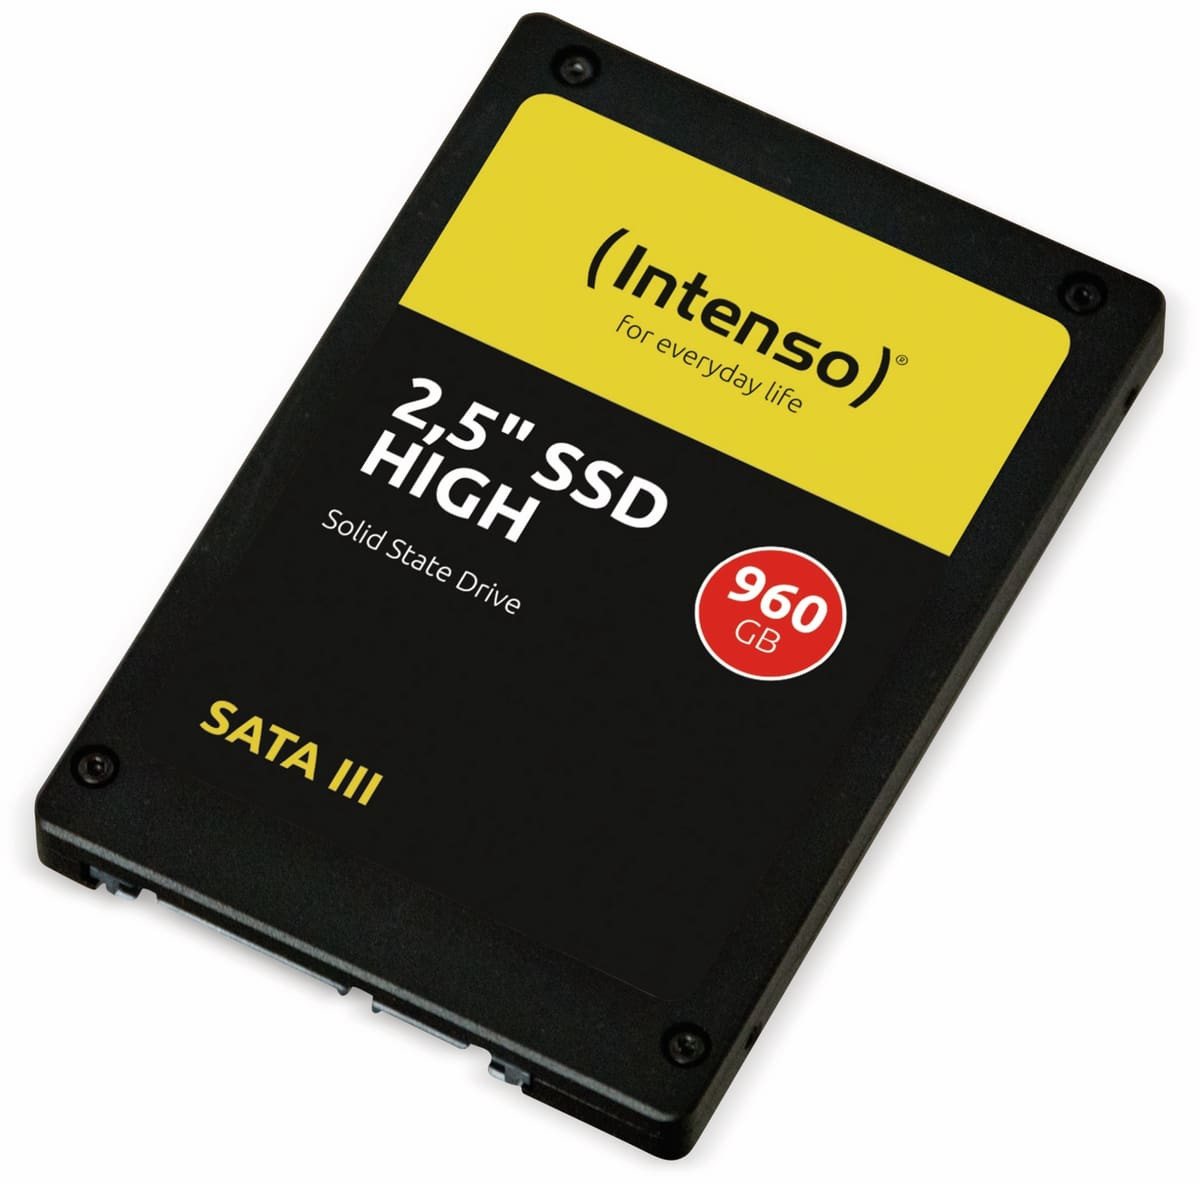 Intenso INTENSO SSD High Performance 3813450, SATA III interne SSD von Intenso